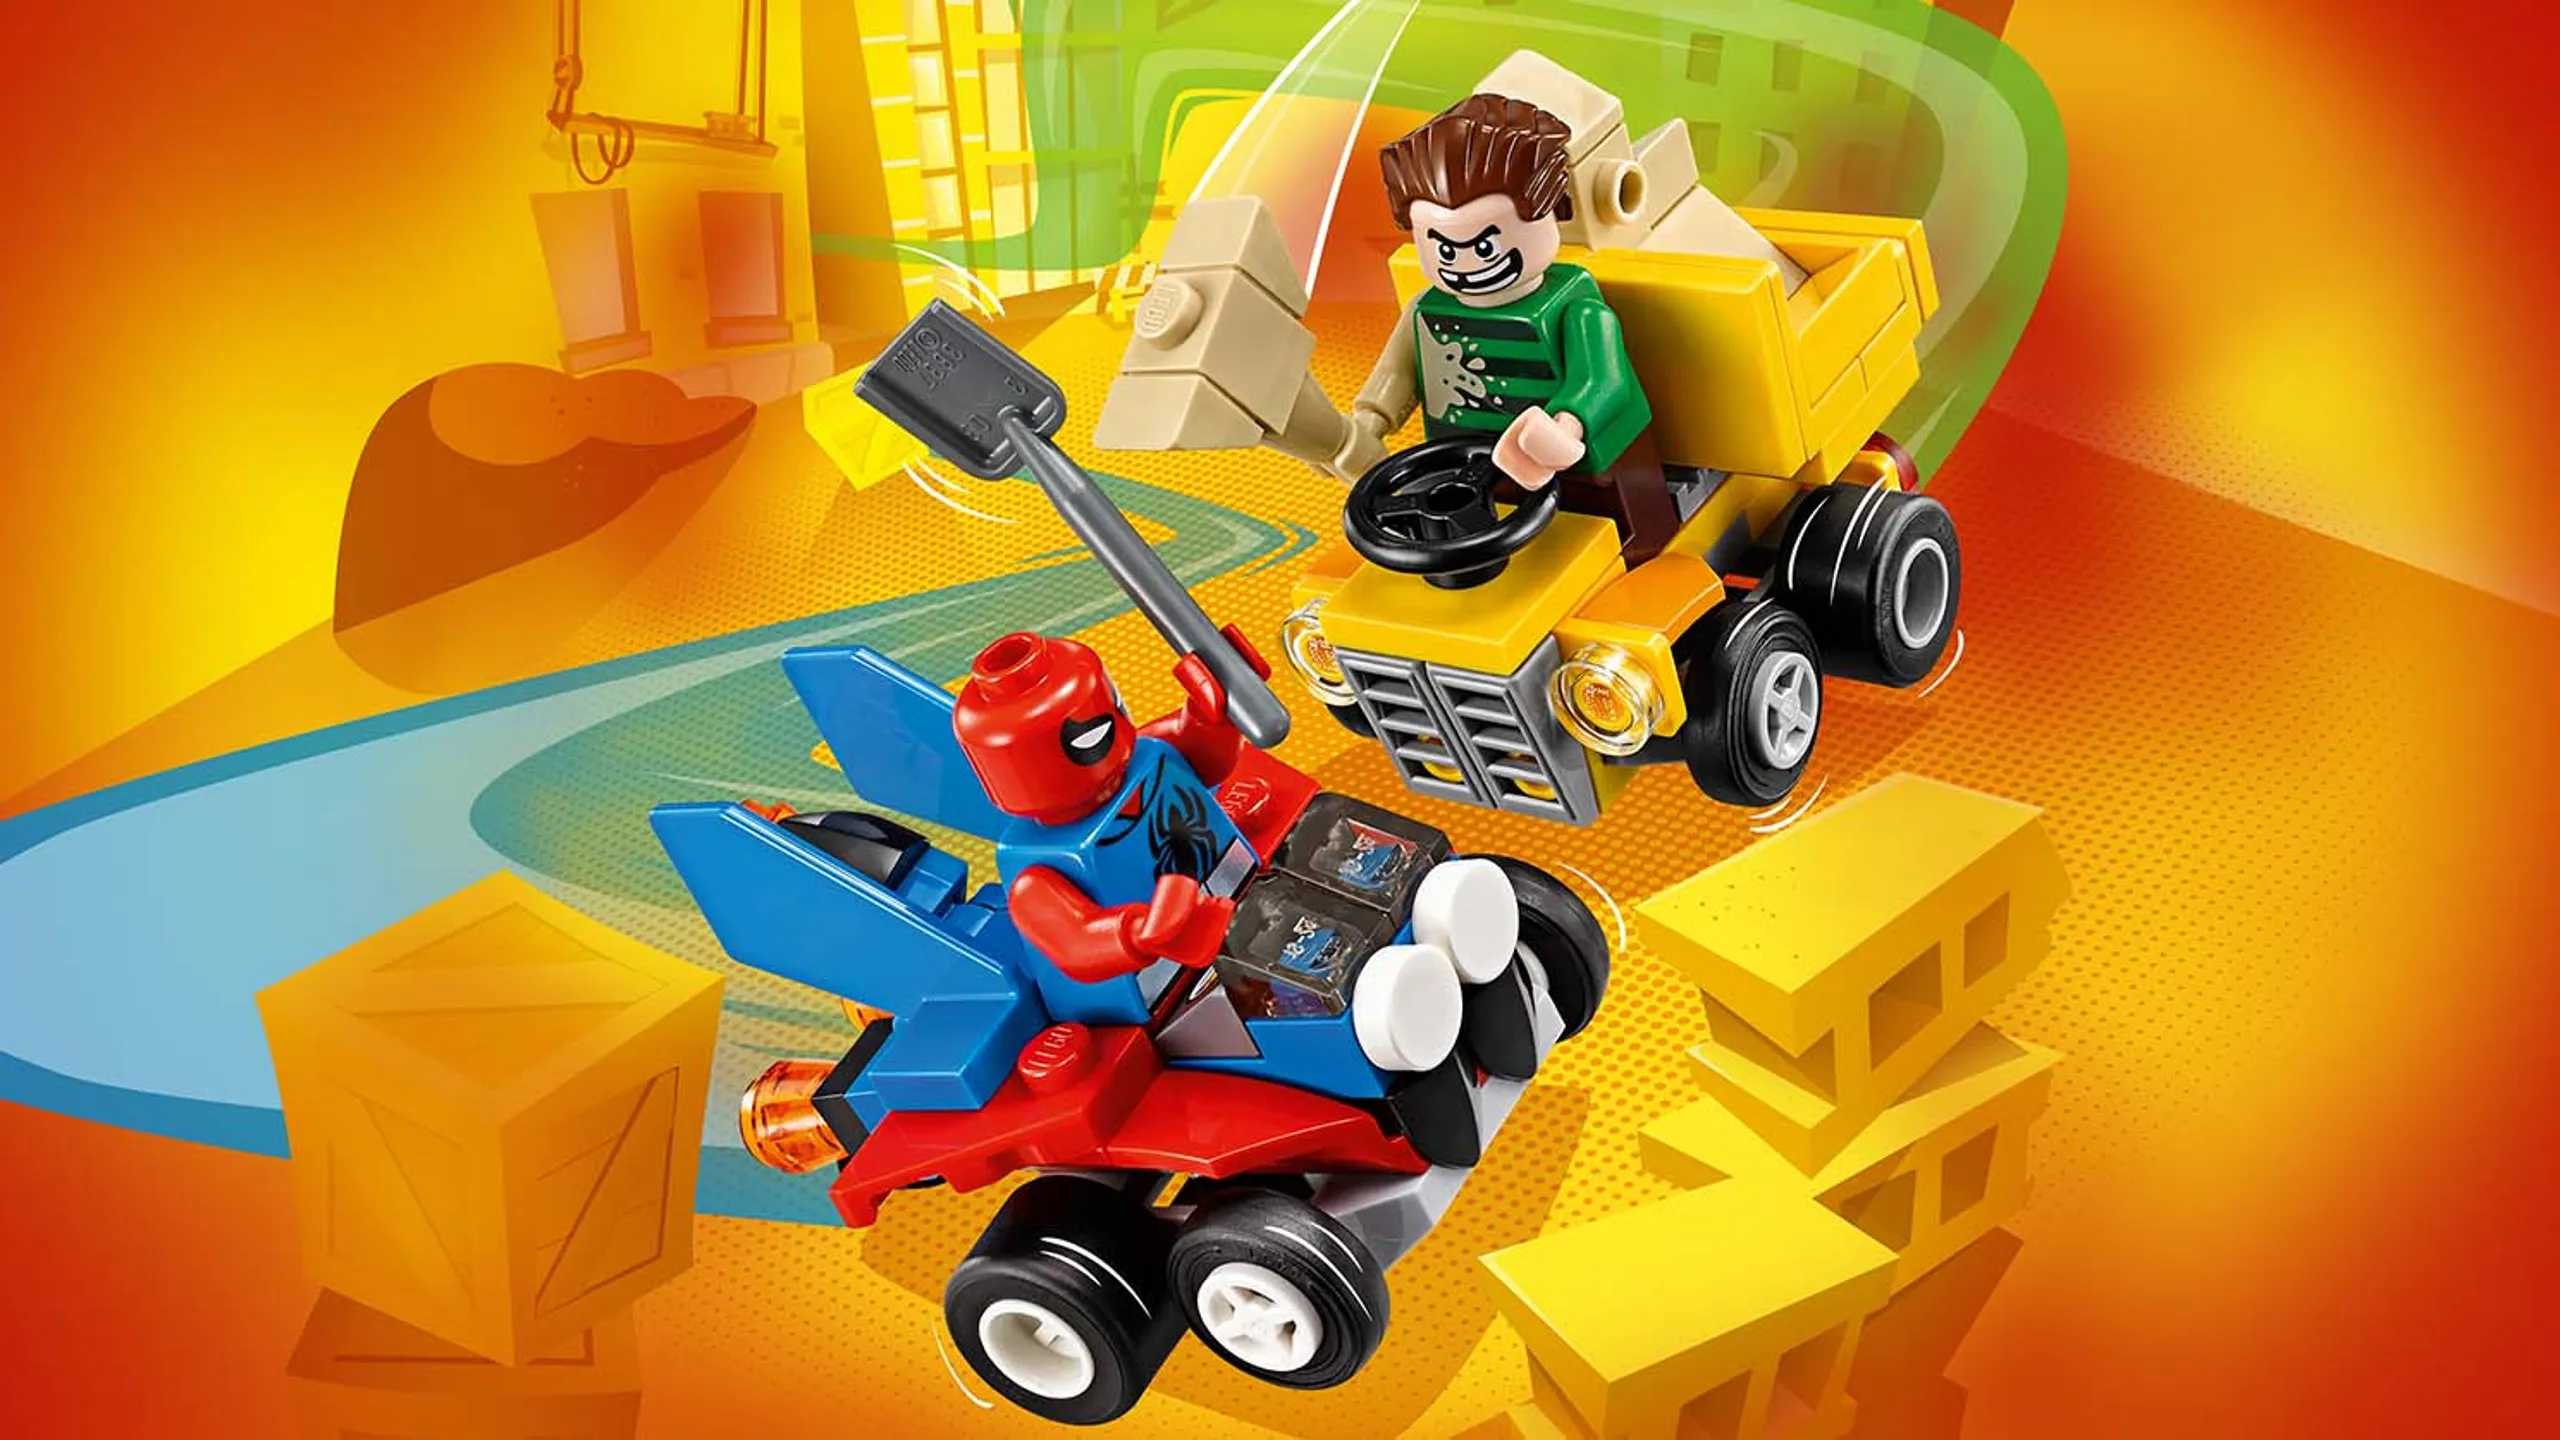 LEGO MARVEL Super Heroes Spider-Man vs. Sandman - 76089 - Spider-Man battles the evil Sandman racing their cars using both hammer and shovel